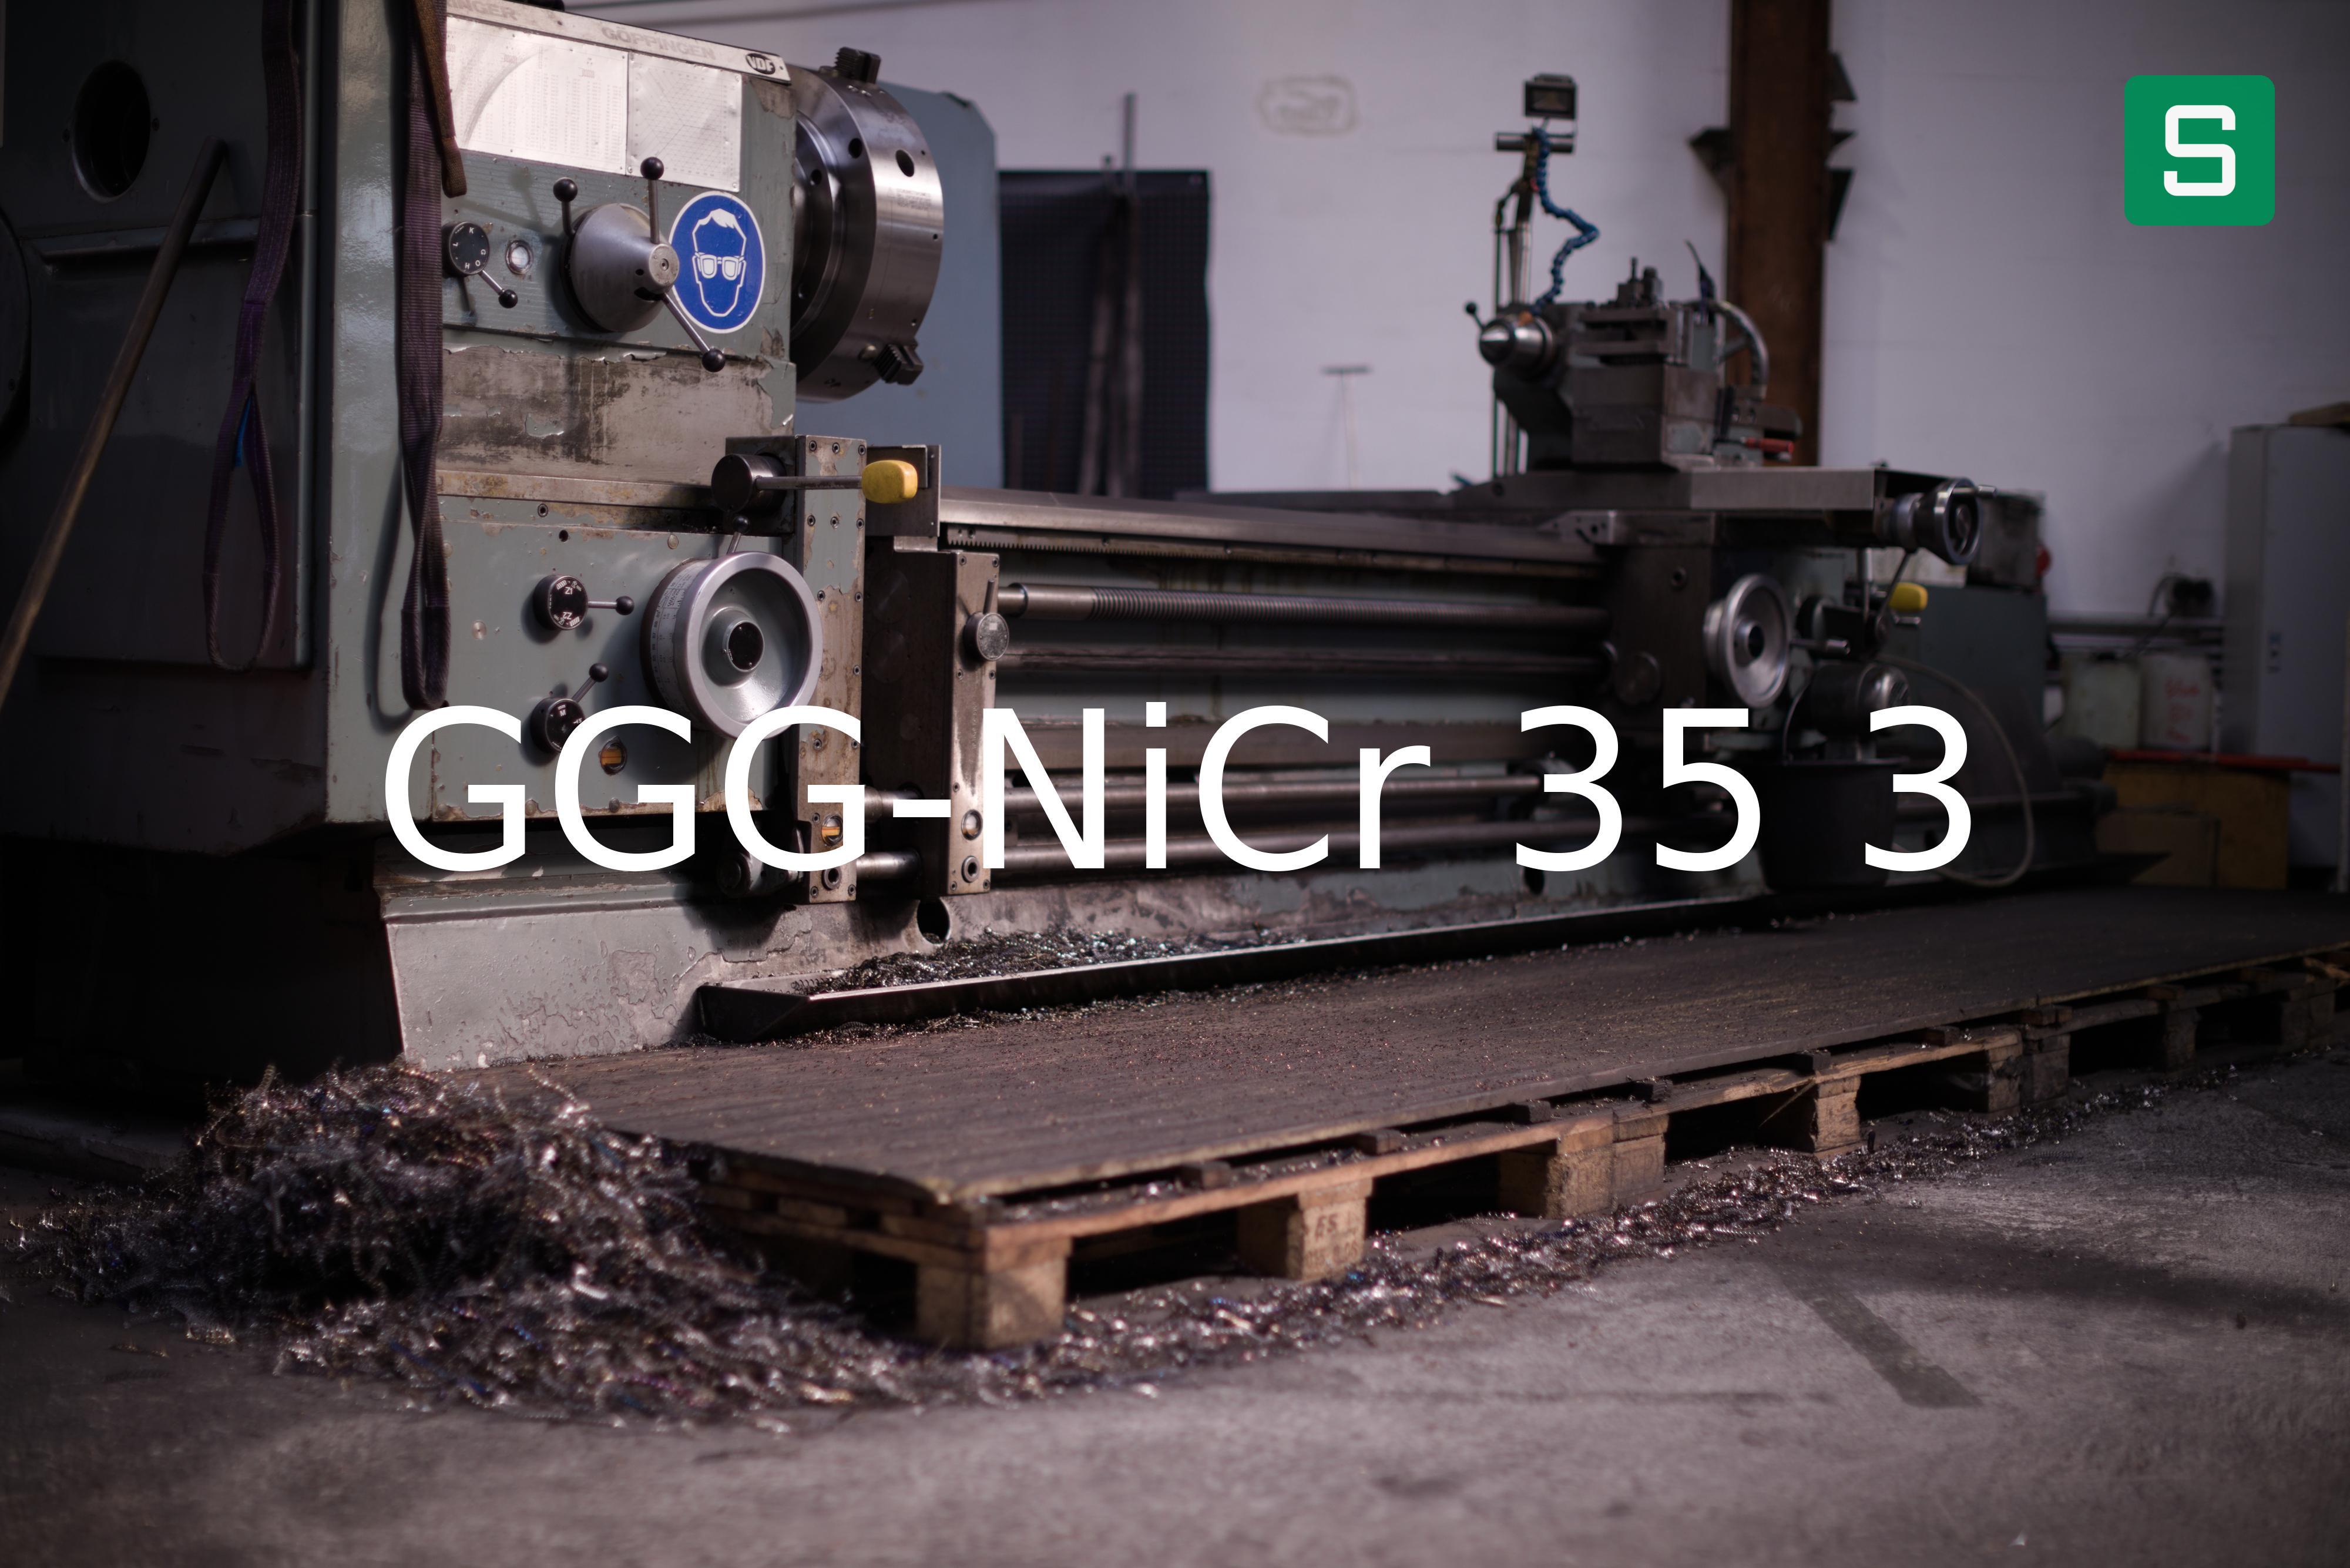 Steel Material: GGG-NiCr 35 3